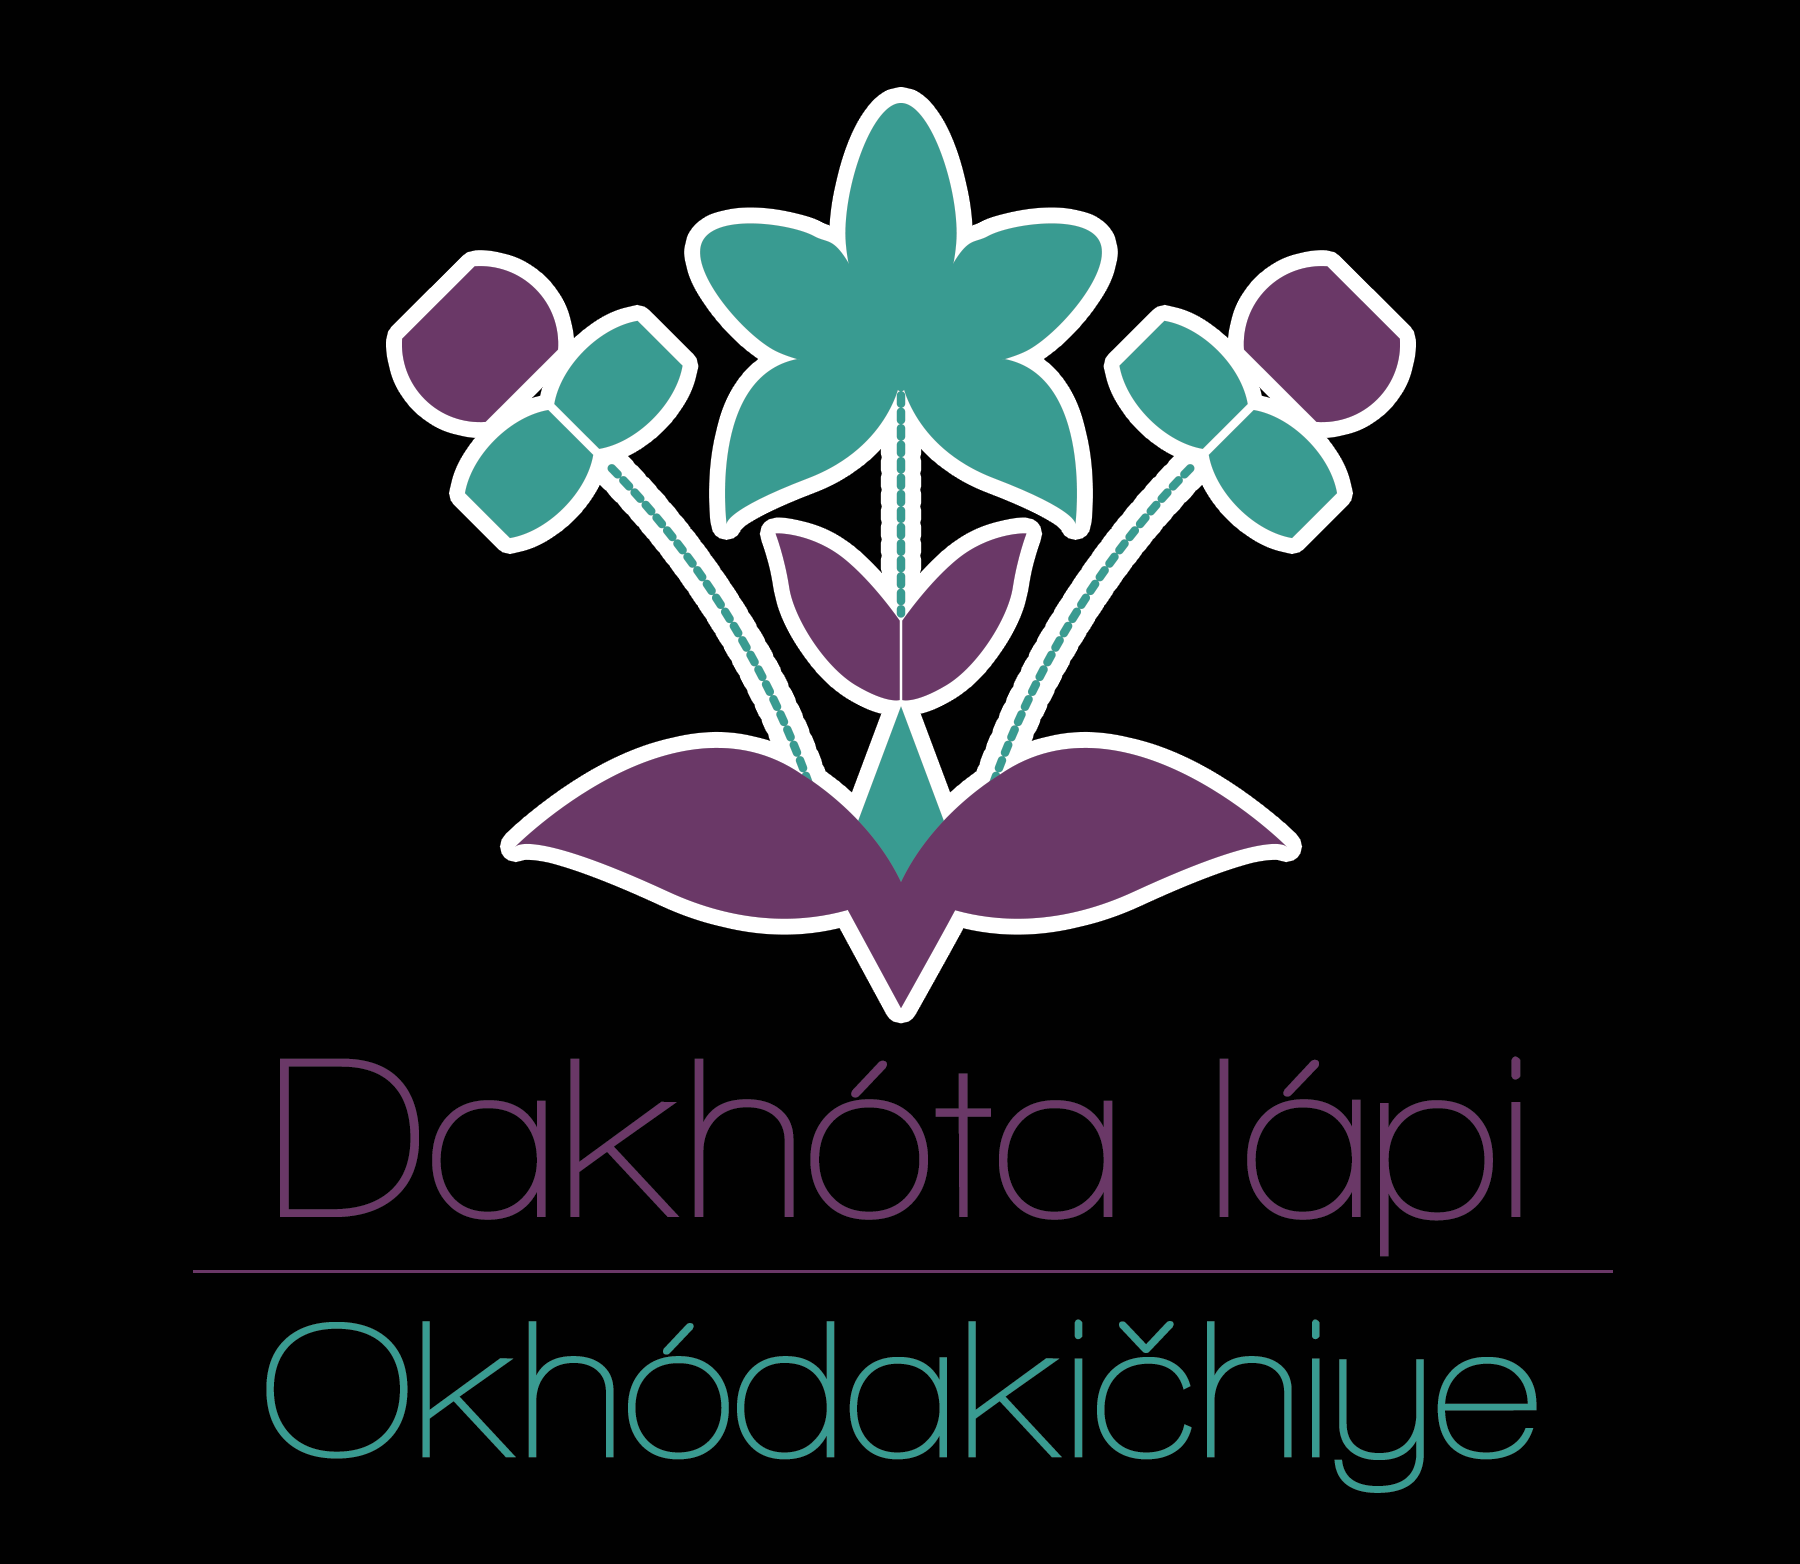 Dakhota Iapi Okhodakichiye logo